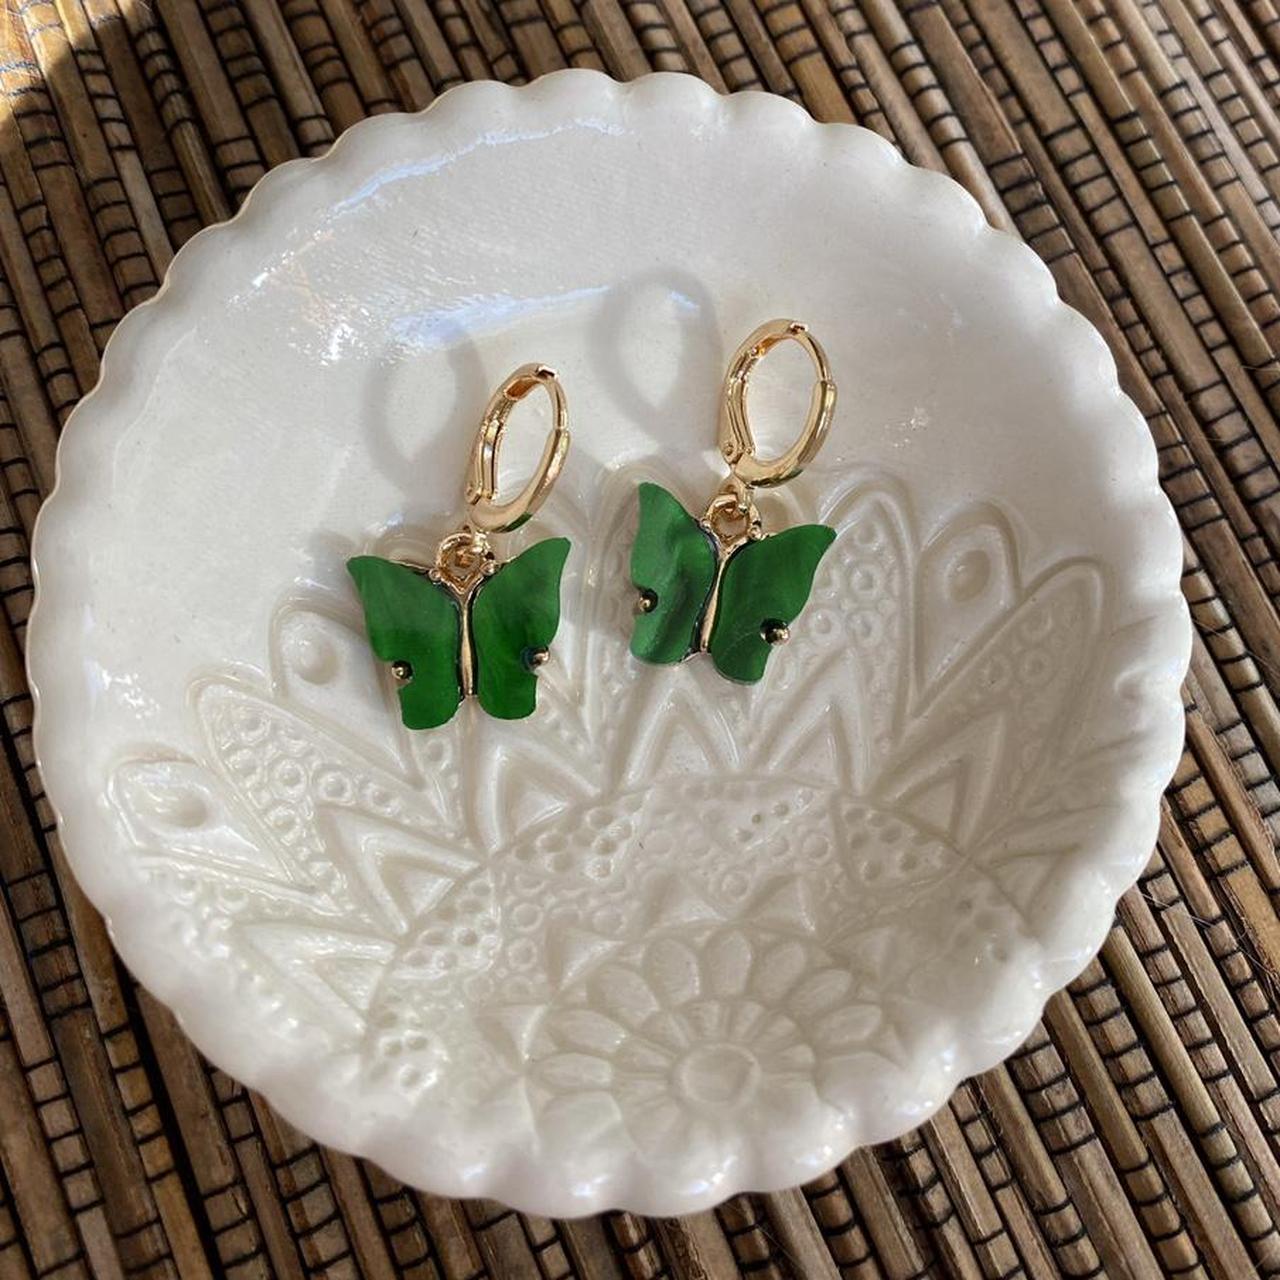 Product Image 1 - Green butterfly pendant dainty earrings
Brand